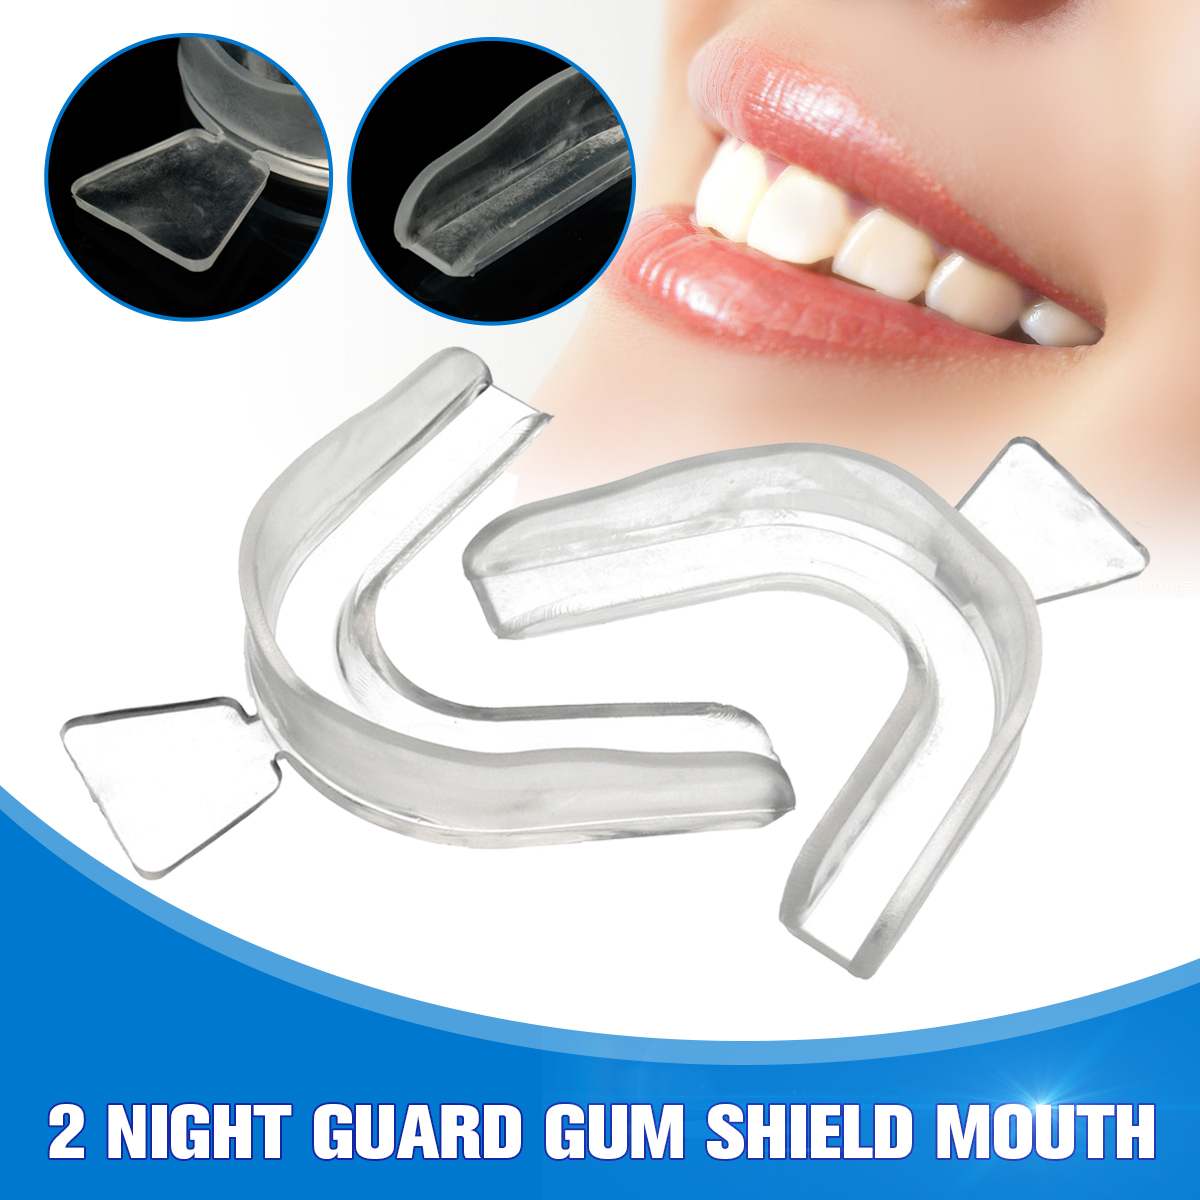 Comprar Ayuda para dormir Protector bucal Protector de dientes bandeja bucal  Protector bucal blanqueamiento dental protección de boxeo